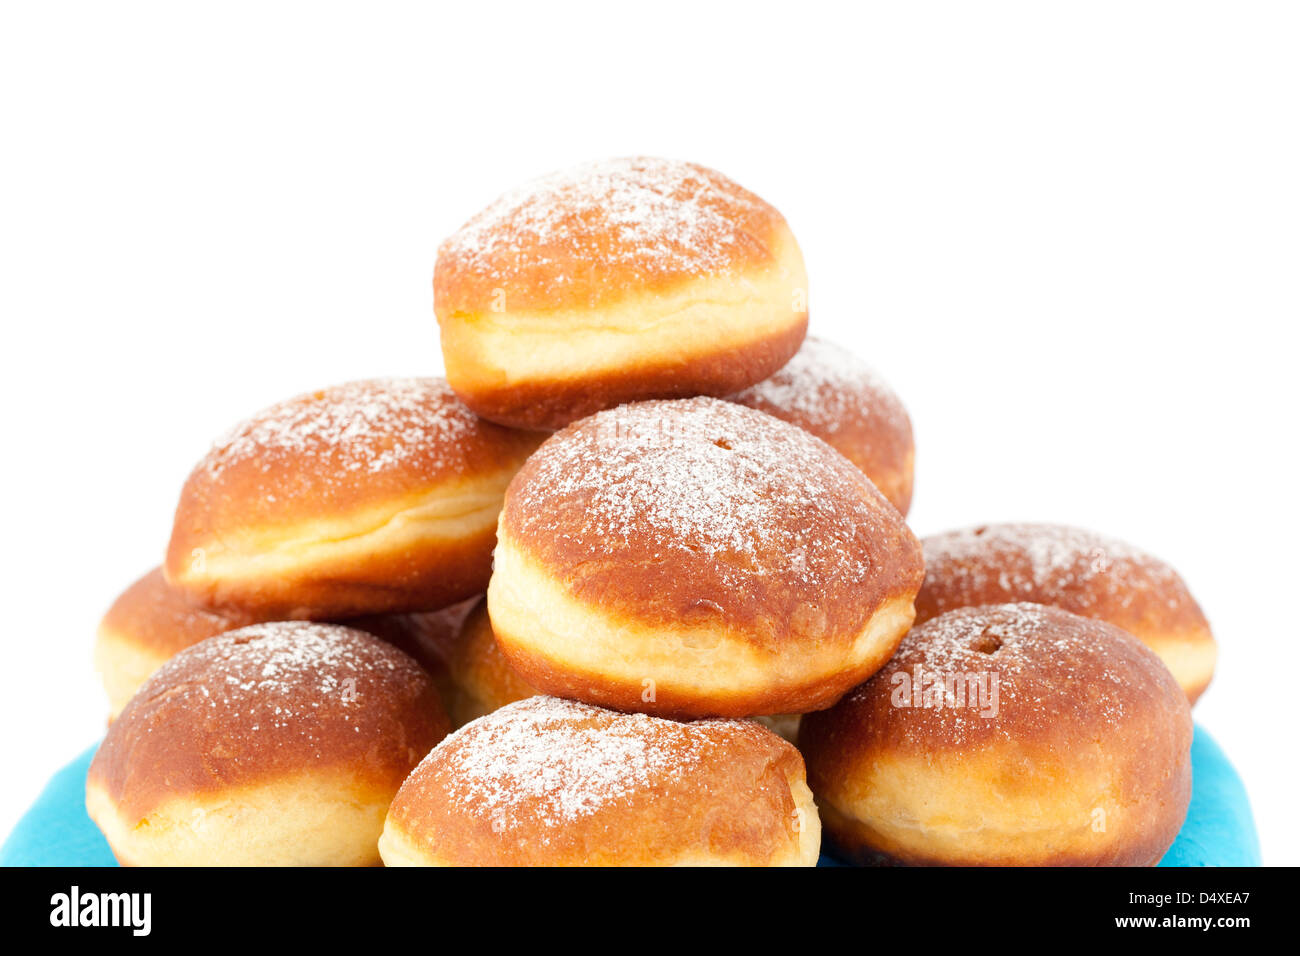 fresh and warm doughnuts on white background Stock Photo